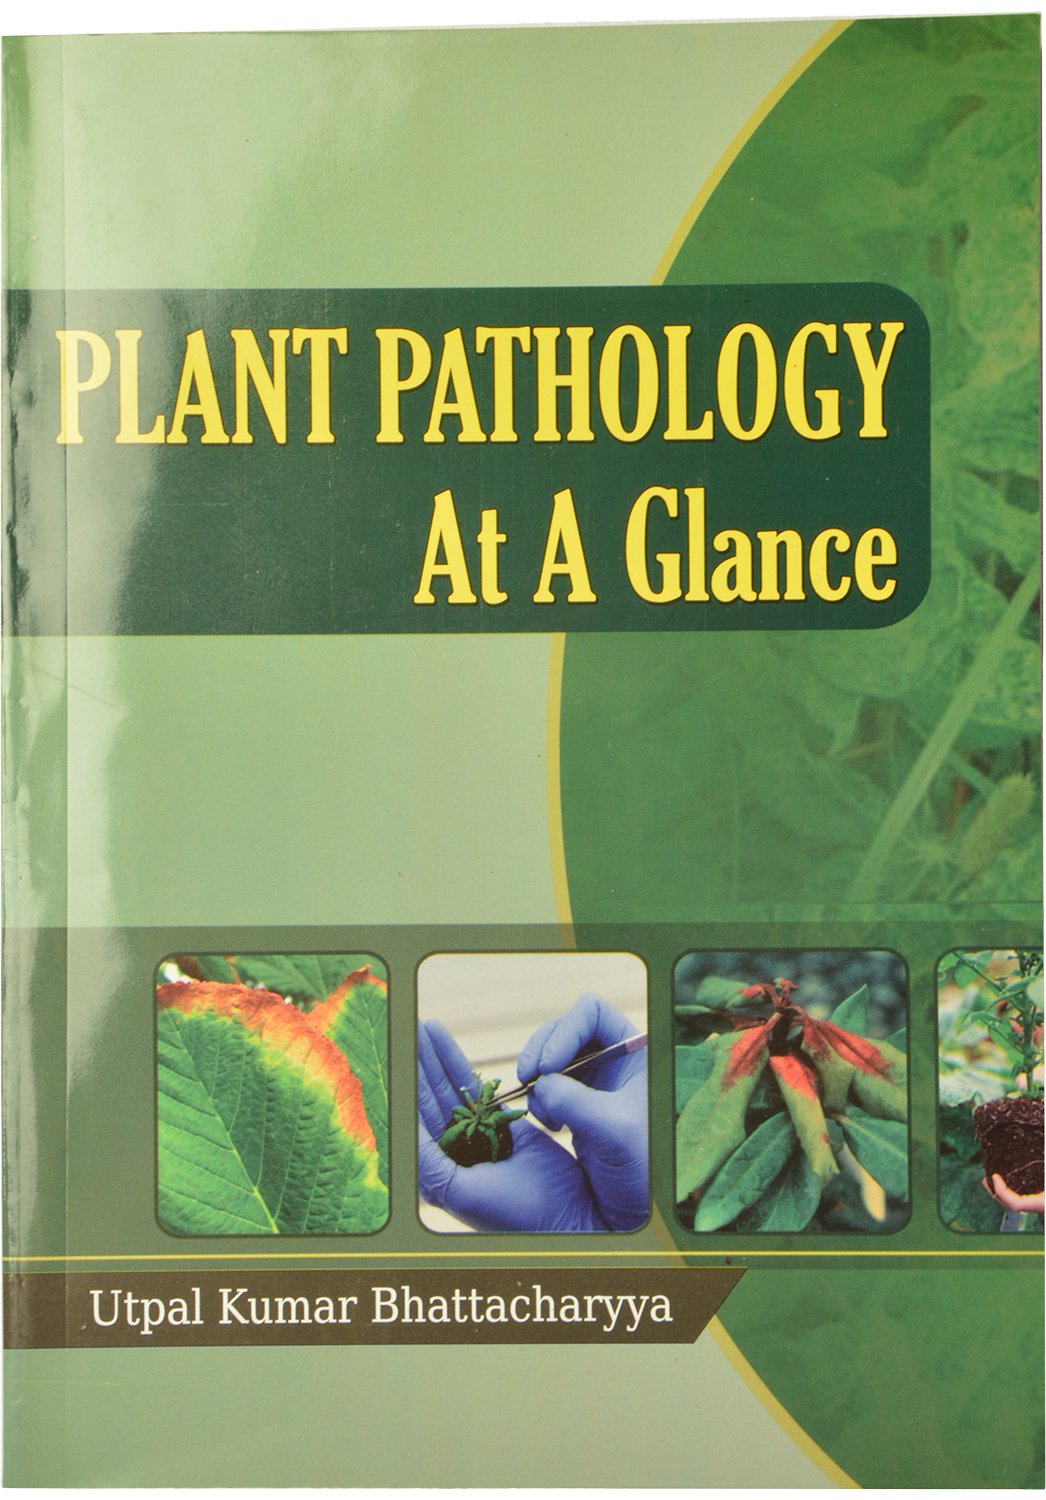 Plant Pathology at a Glance